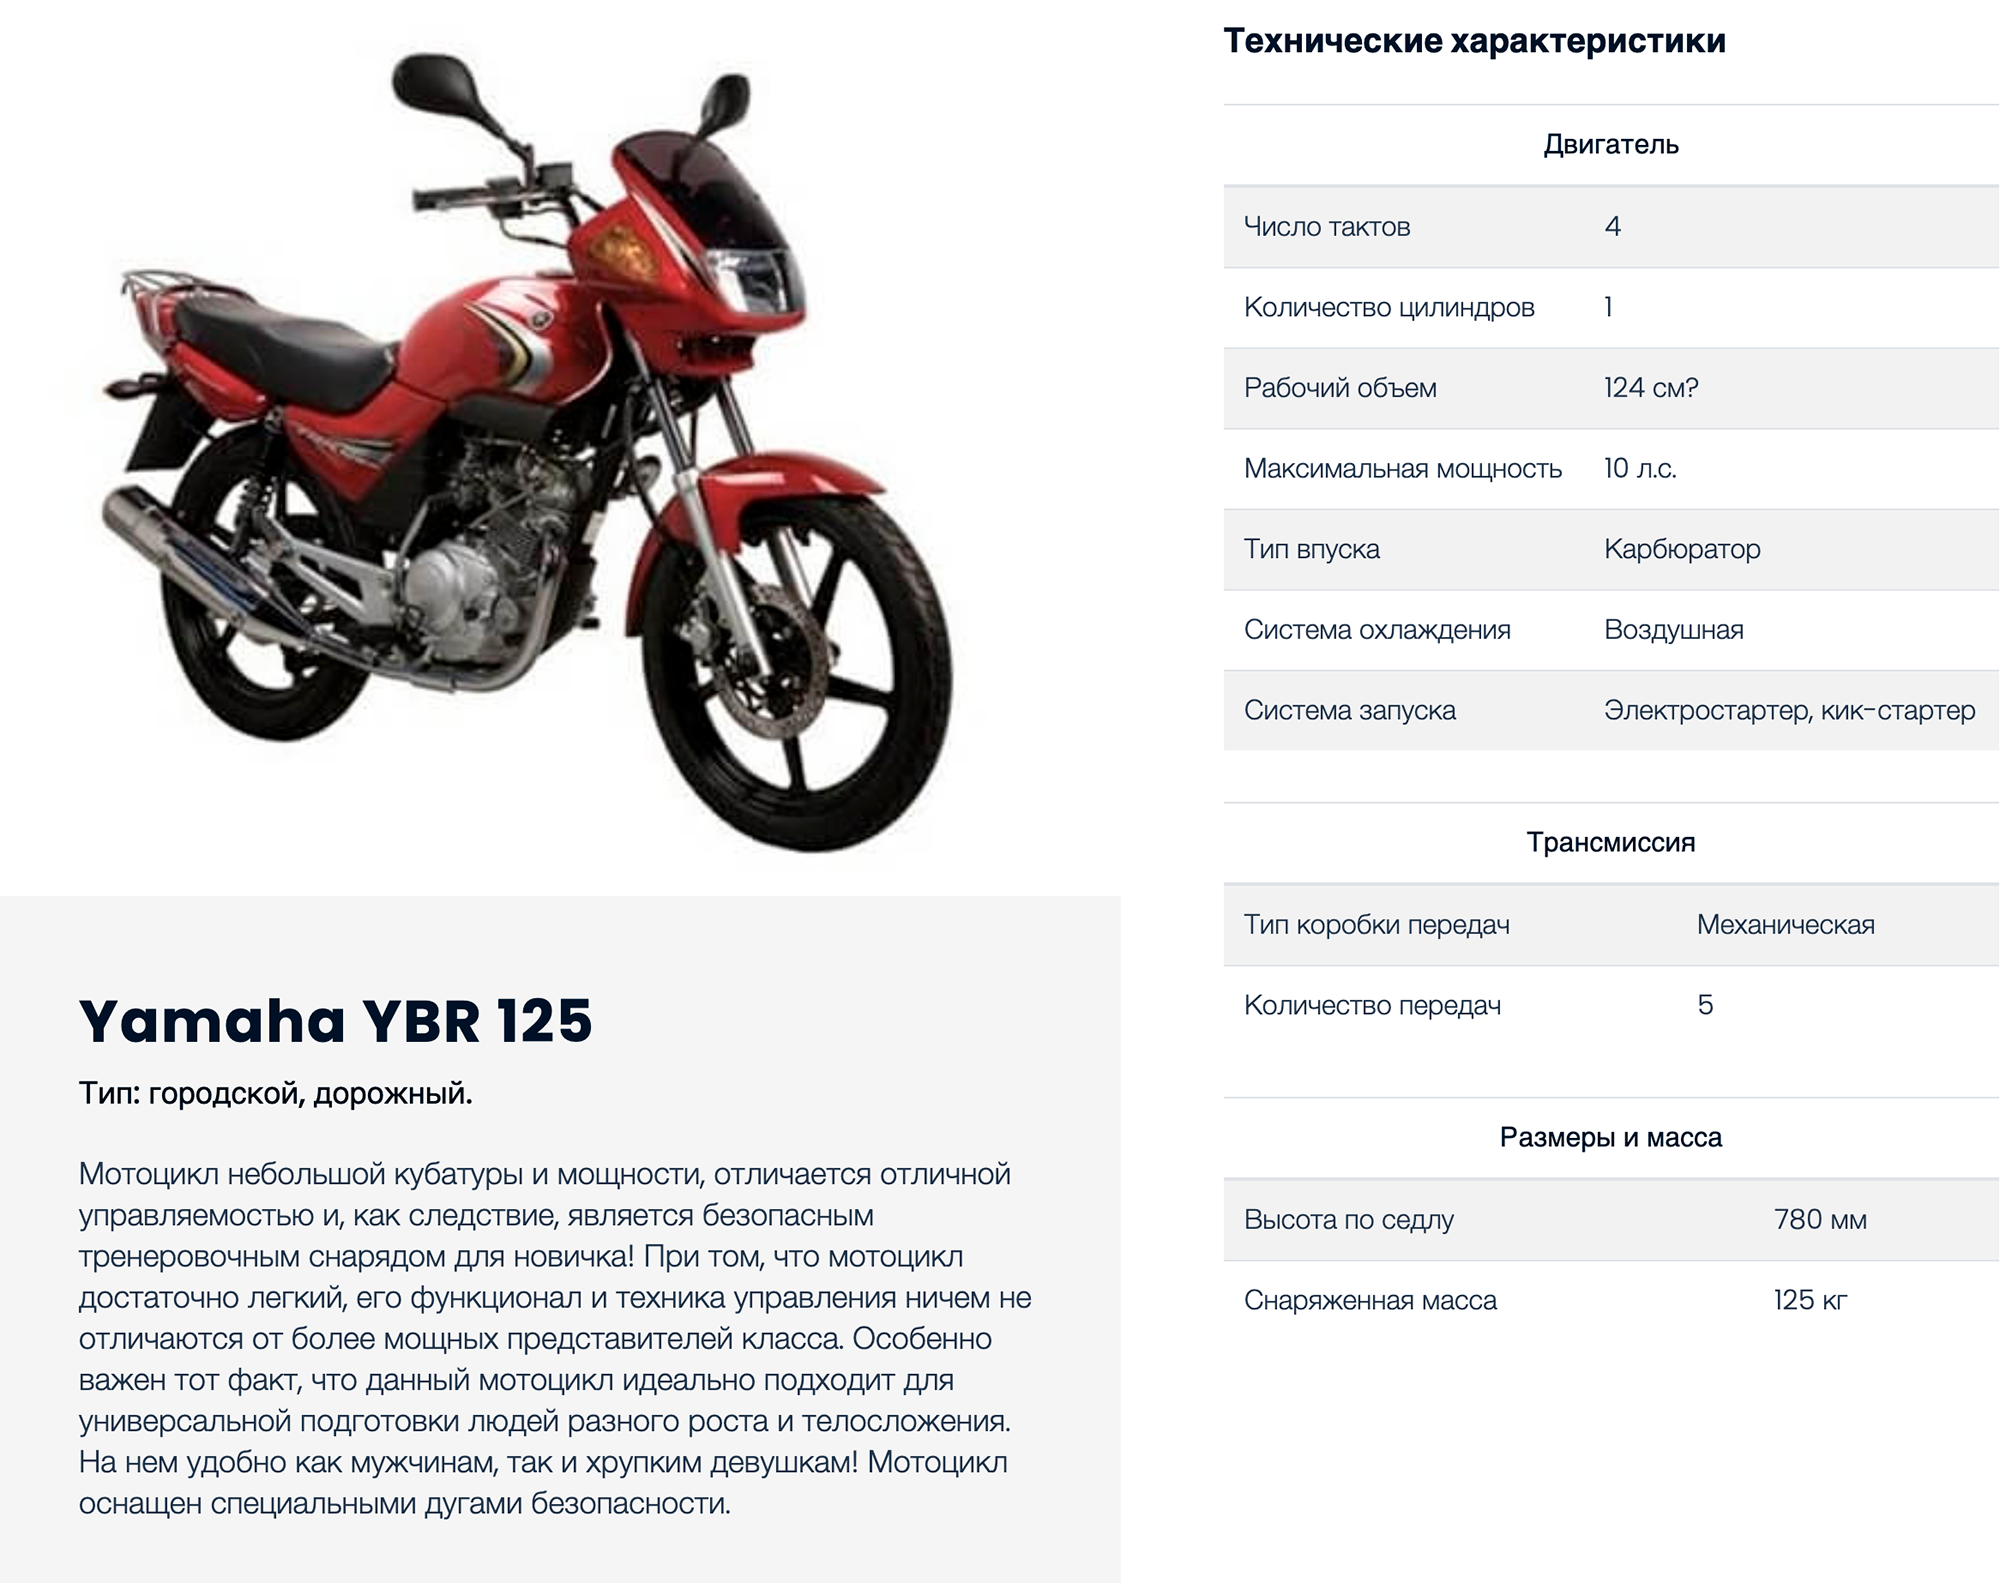 Yamaha YBR 125 ПТС. Габариты мотоцикла Ямаха юбр 125. Вес Ямаха юбр 125. Ямаха YBR 125 высота по седлу. Объем мопеда альфа